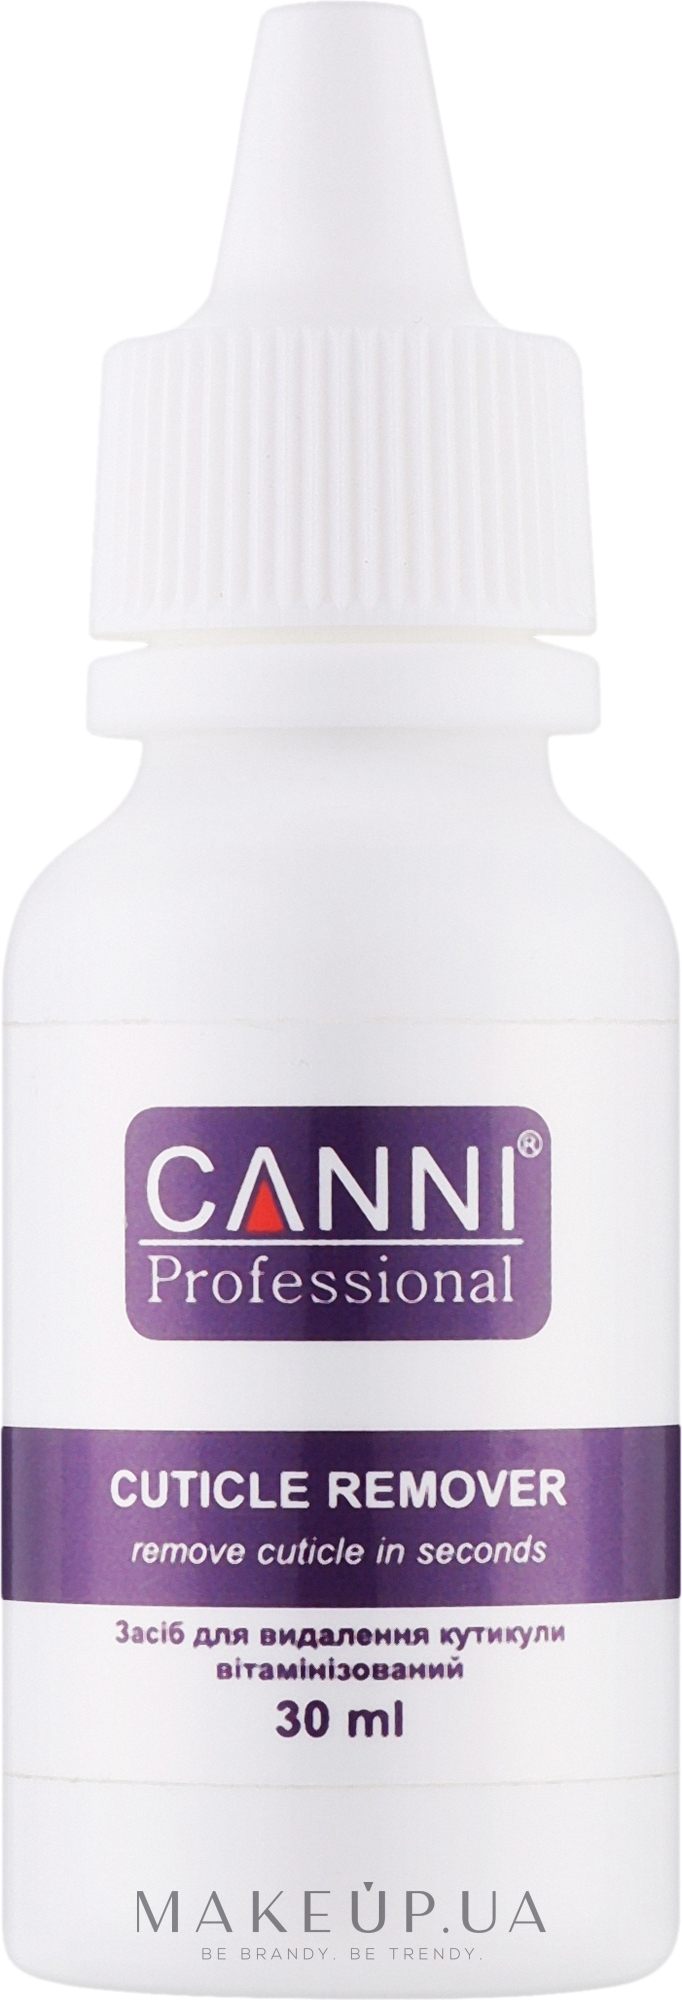 Ремувер для кутикулы витаминизированный - Canni Cuticle Remover — фото 30ml